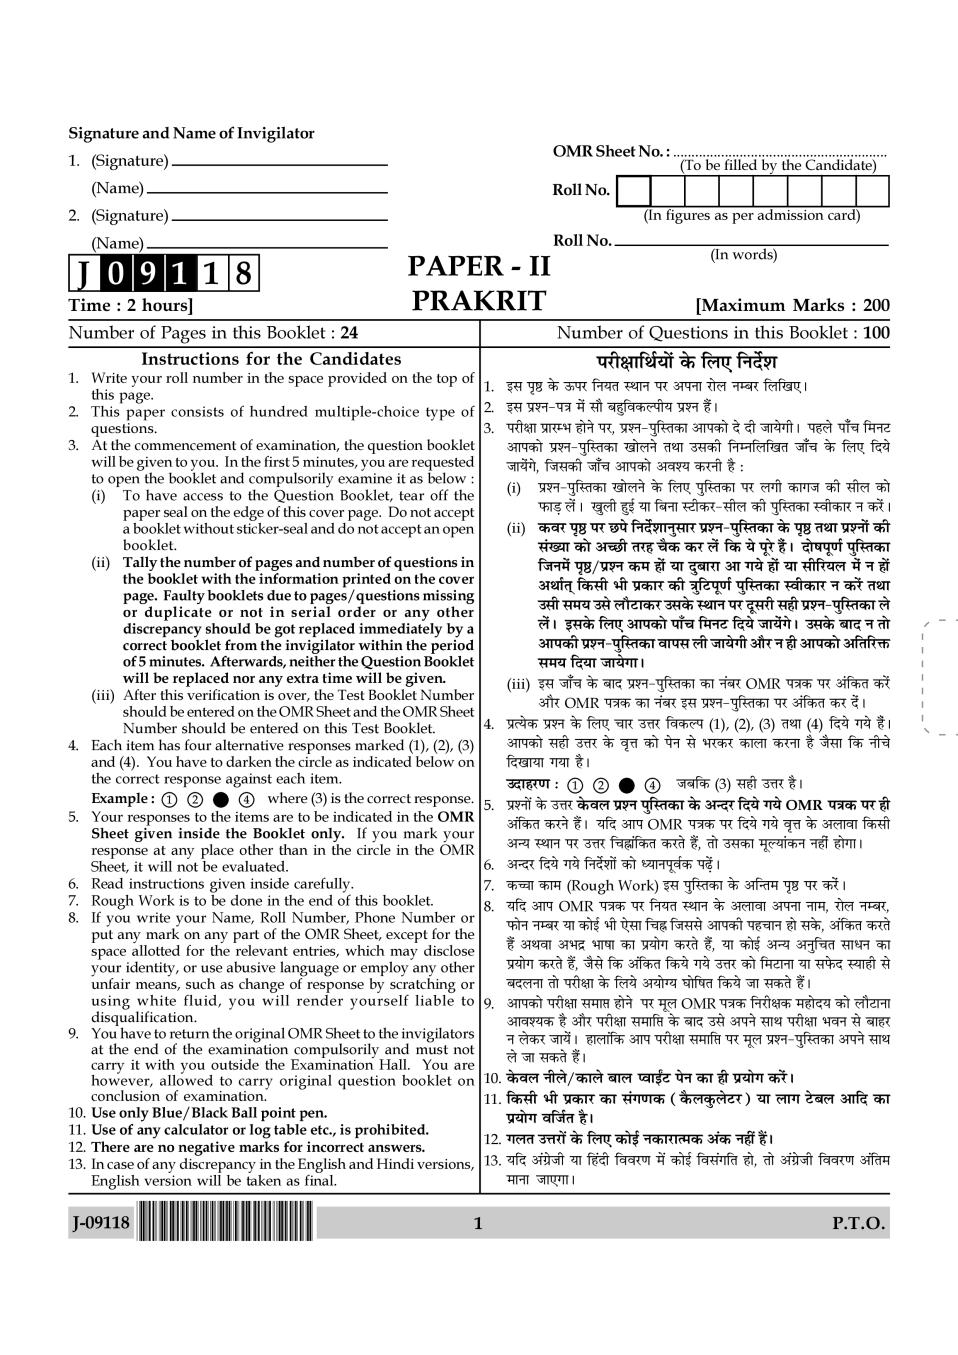 UGC NET Prakrit Question Paper 2018 - Page 1